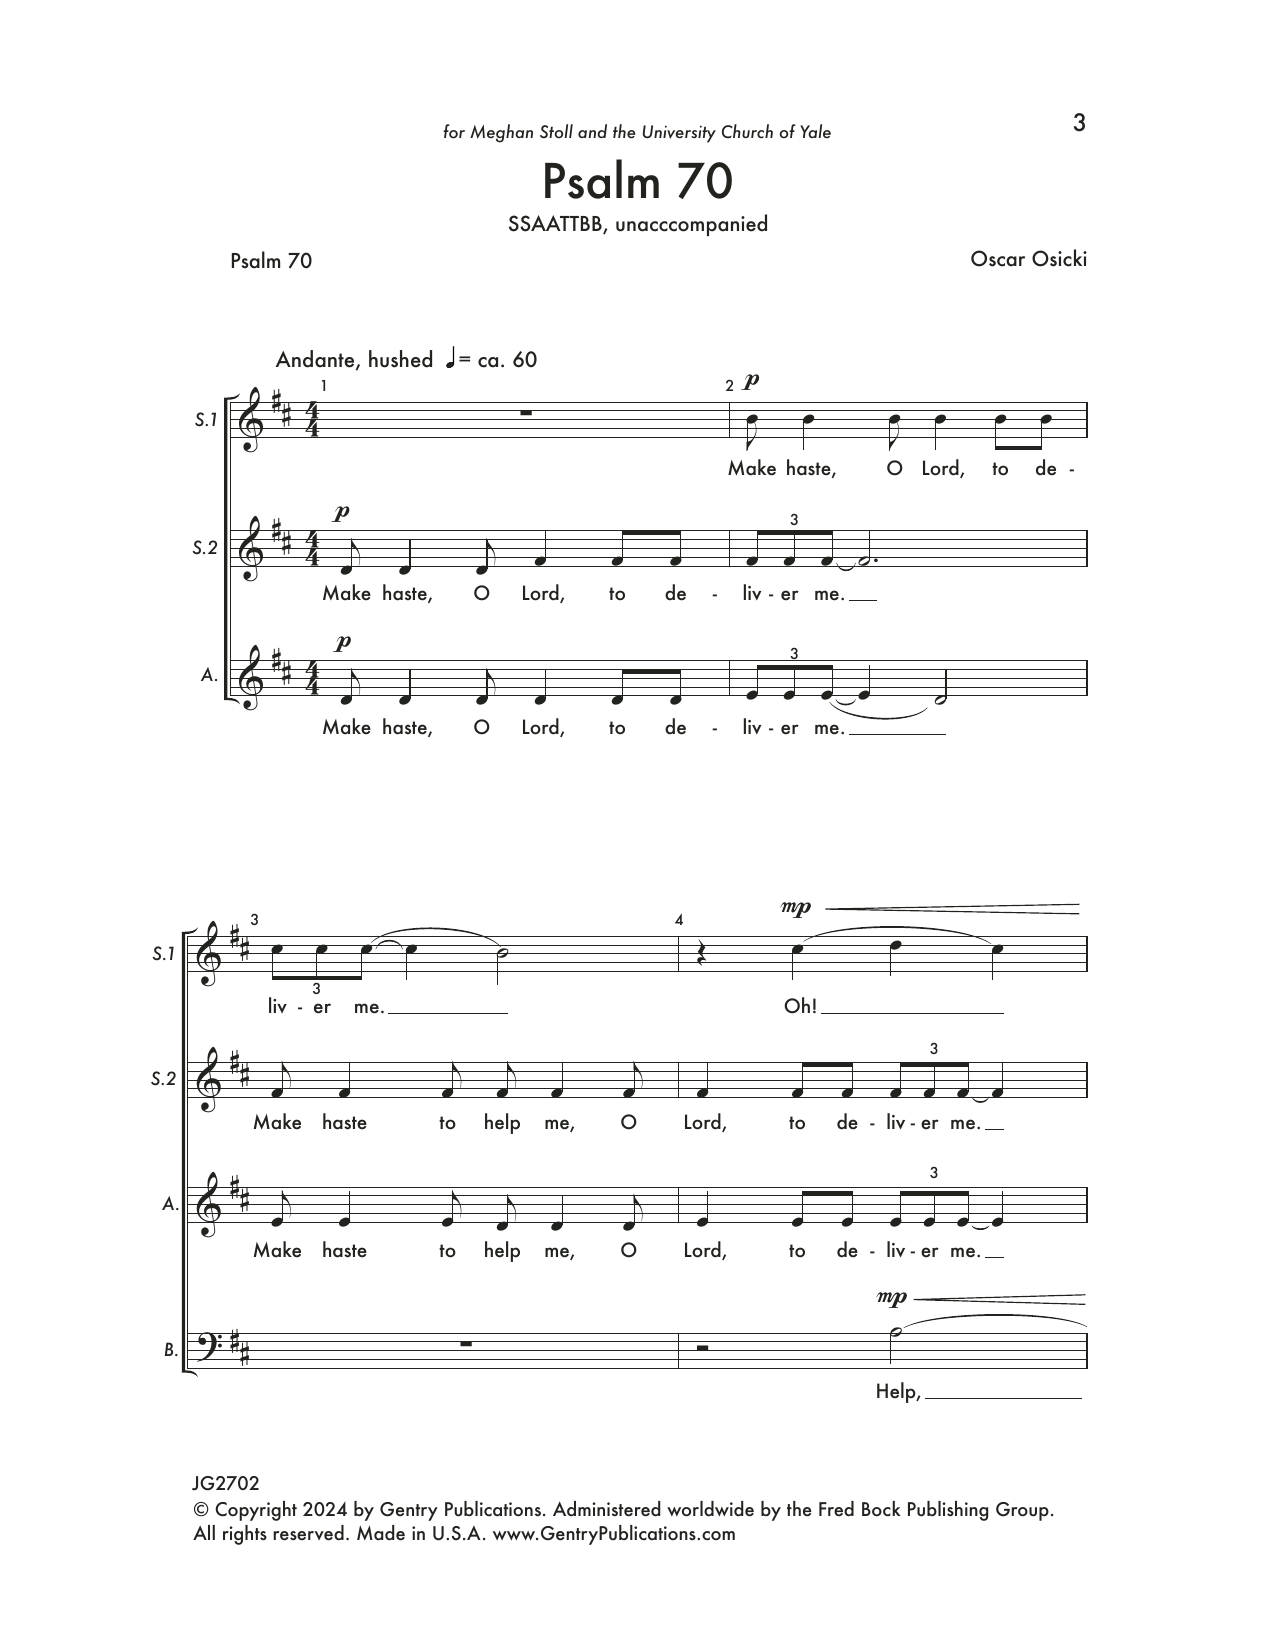 Oscar Osicki Psalm 70 Sheet Music Notes & Chords for Choir - Download or Print PDF